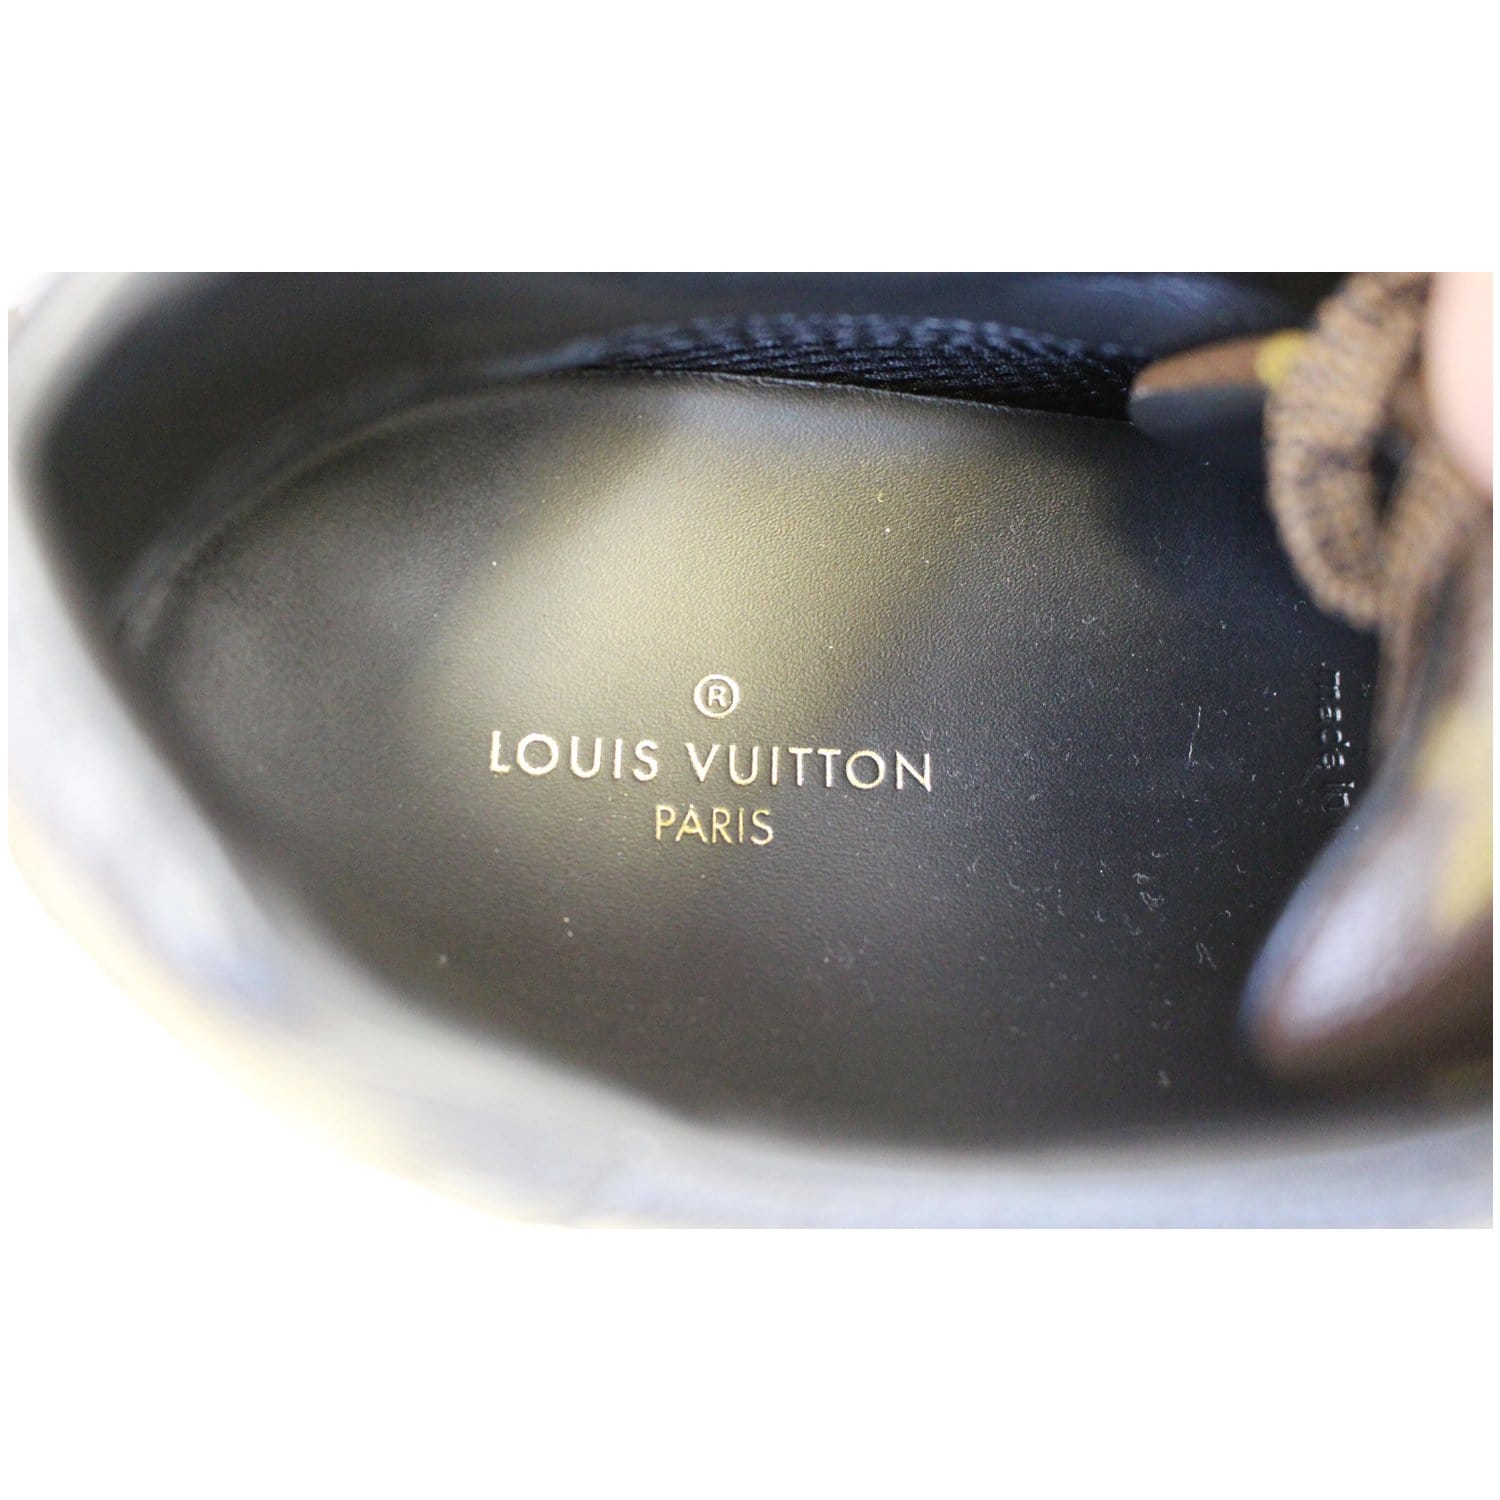 Louis Vuitton Run Away Triple Monogram